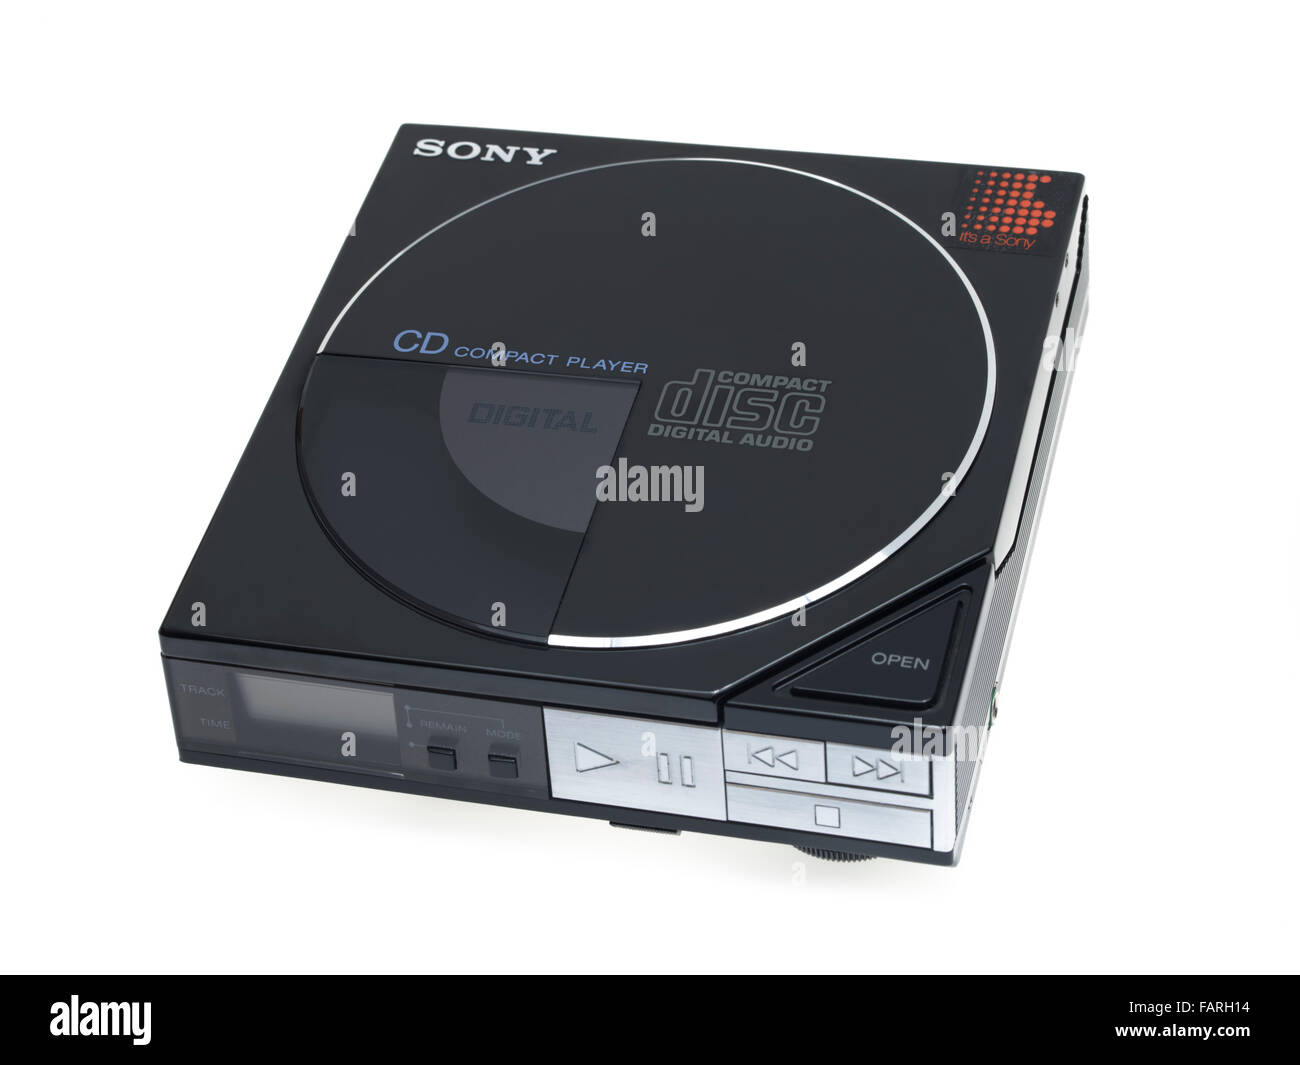 SONY DISCMAN D-22, Vintage, Reproductor CD portátil